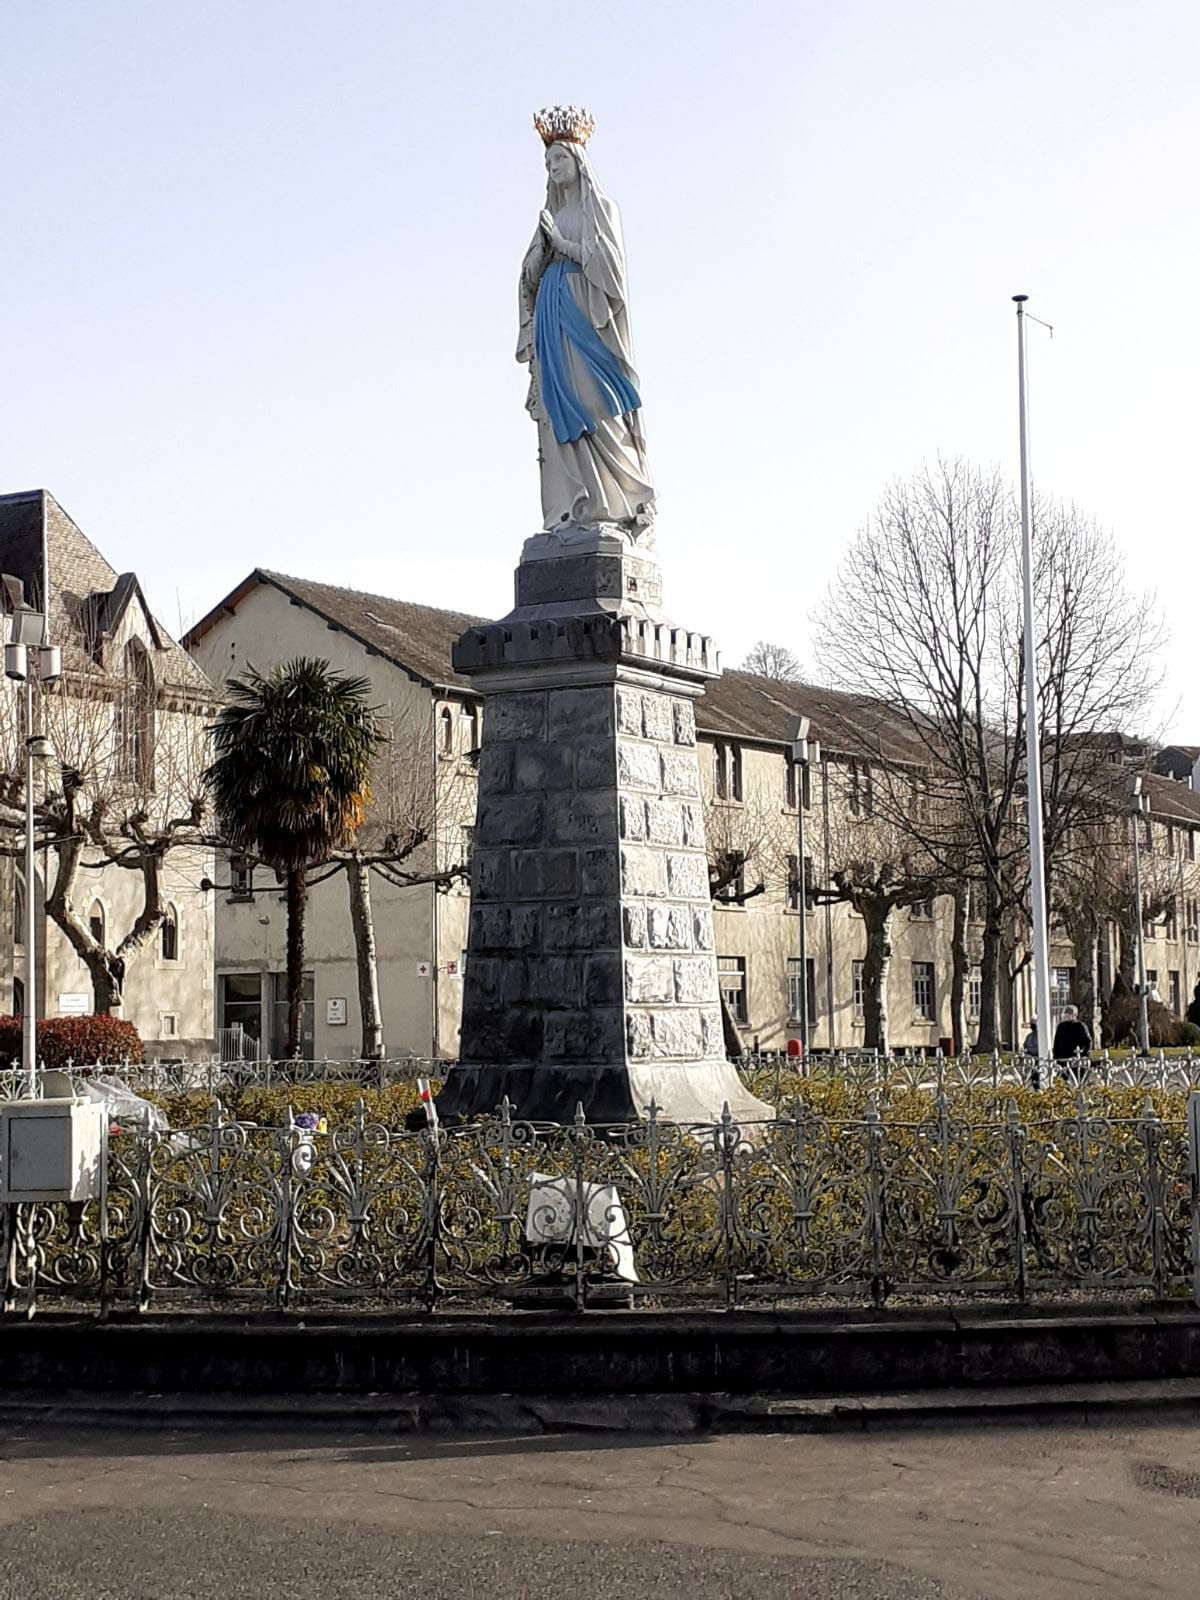 Pielgrzymka do Lourdes w czasie pandemi. Pèlerinage à Lourdes et la pandémie.